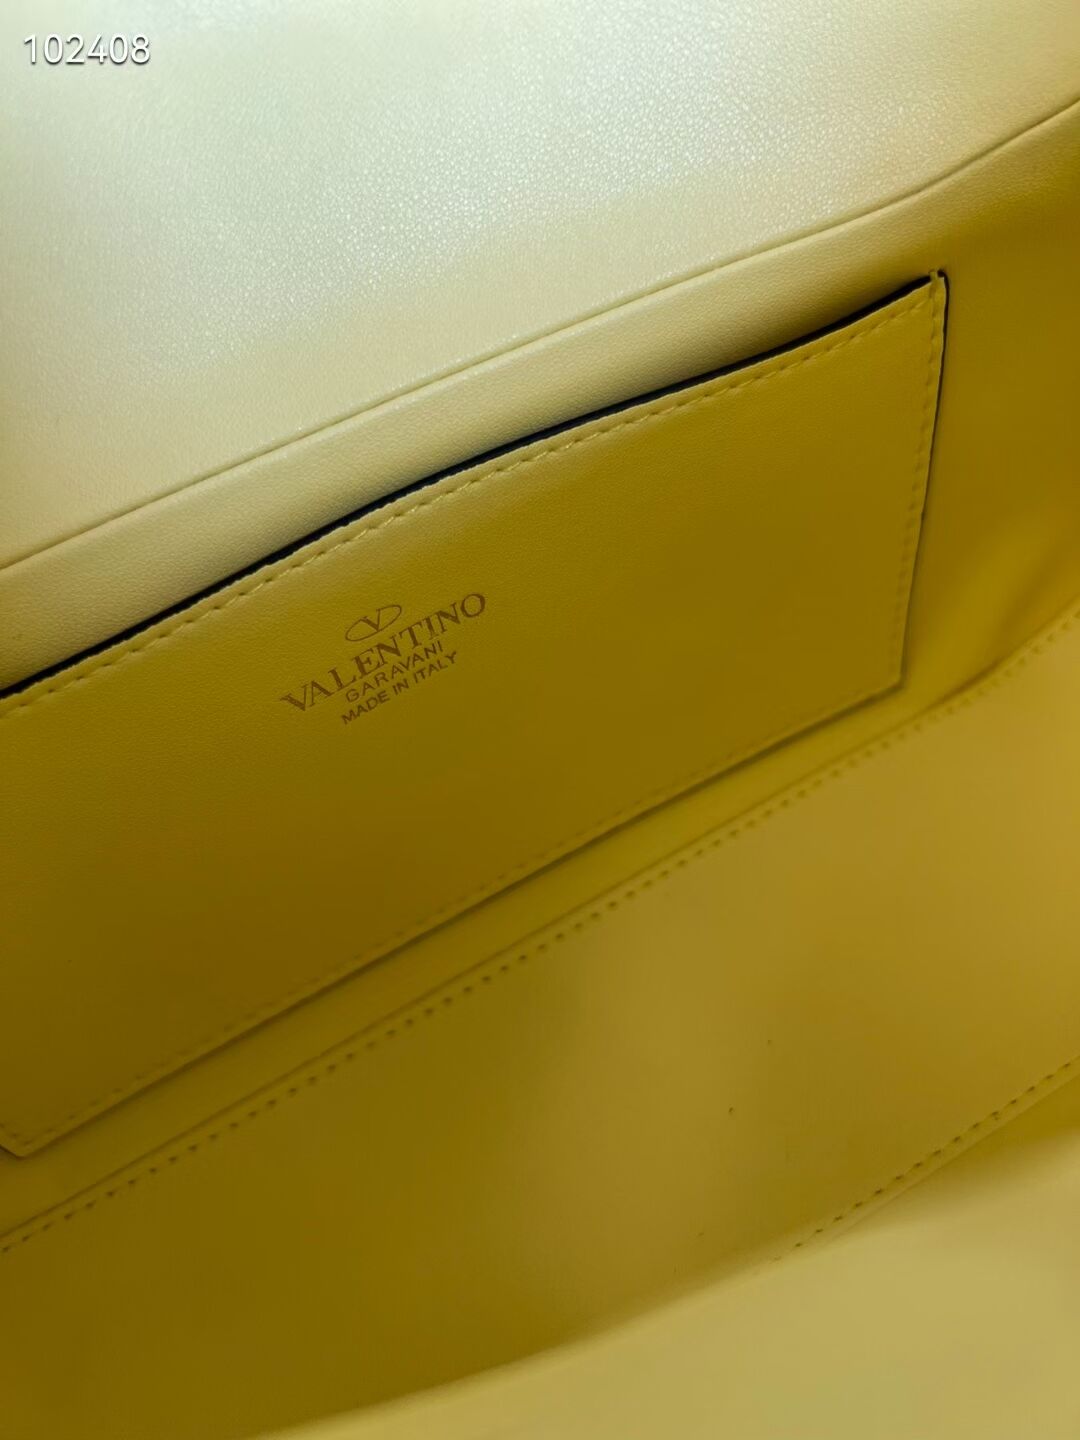 VALENTINO GARAVANI Loco Calf leather bag V2028 yellow